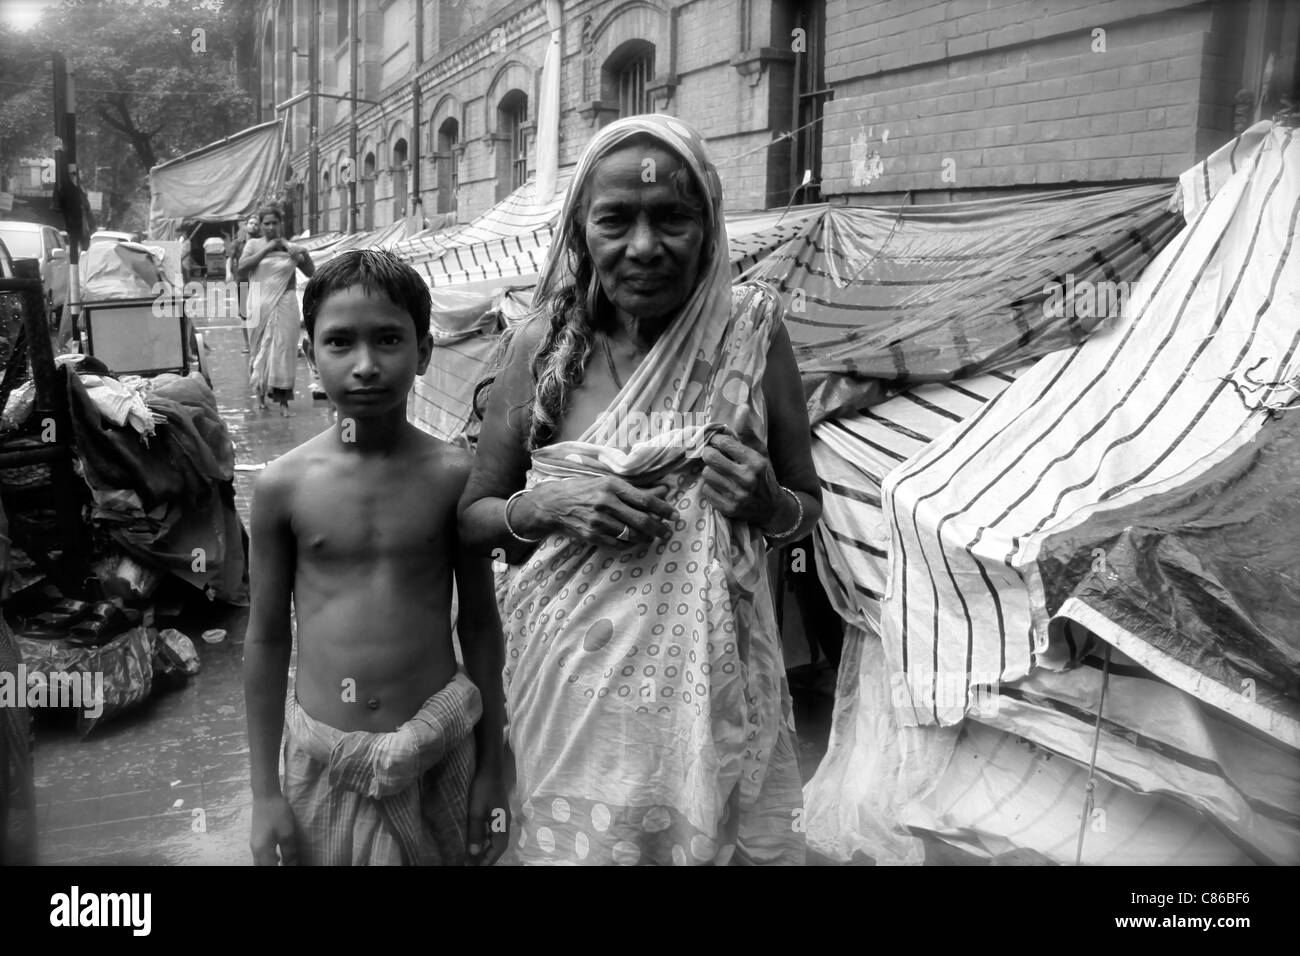 Homeless people living on the streets of Kolkata (Calcutta) India Stock Photo